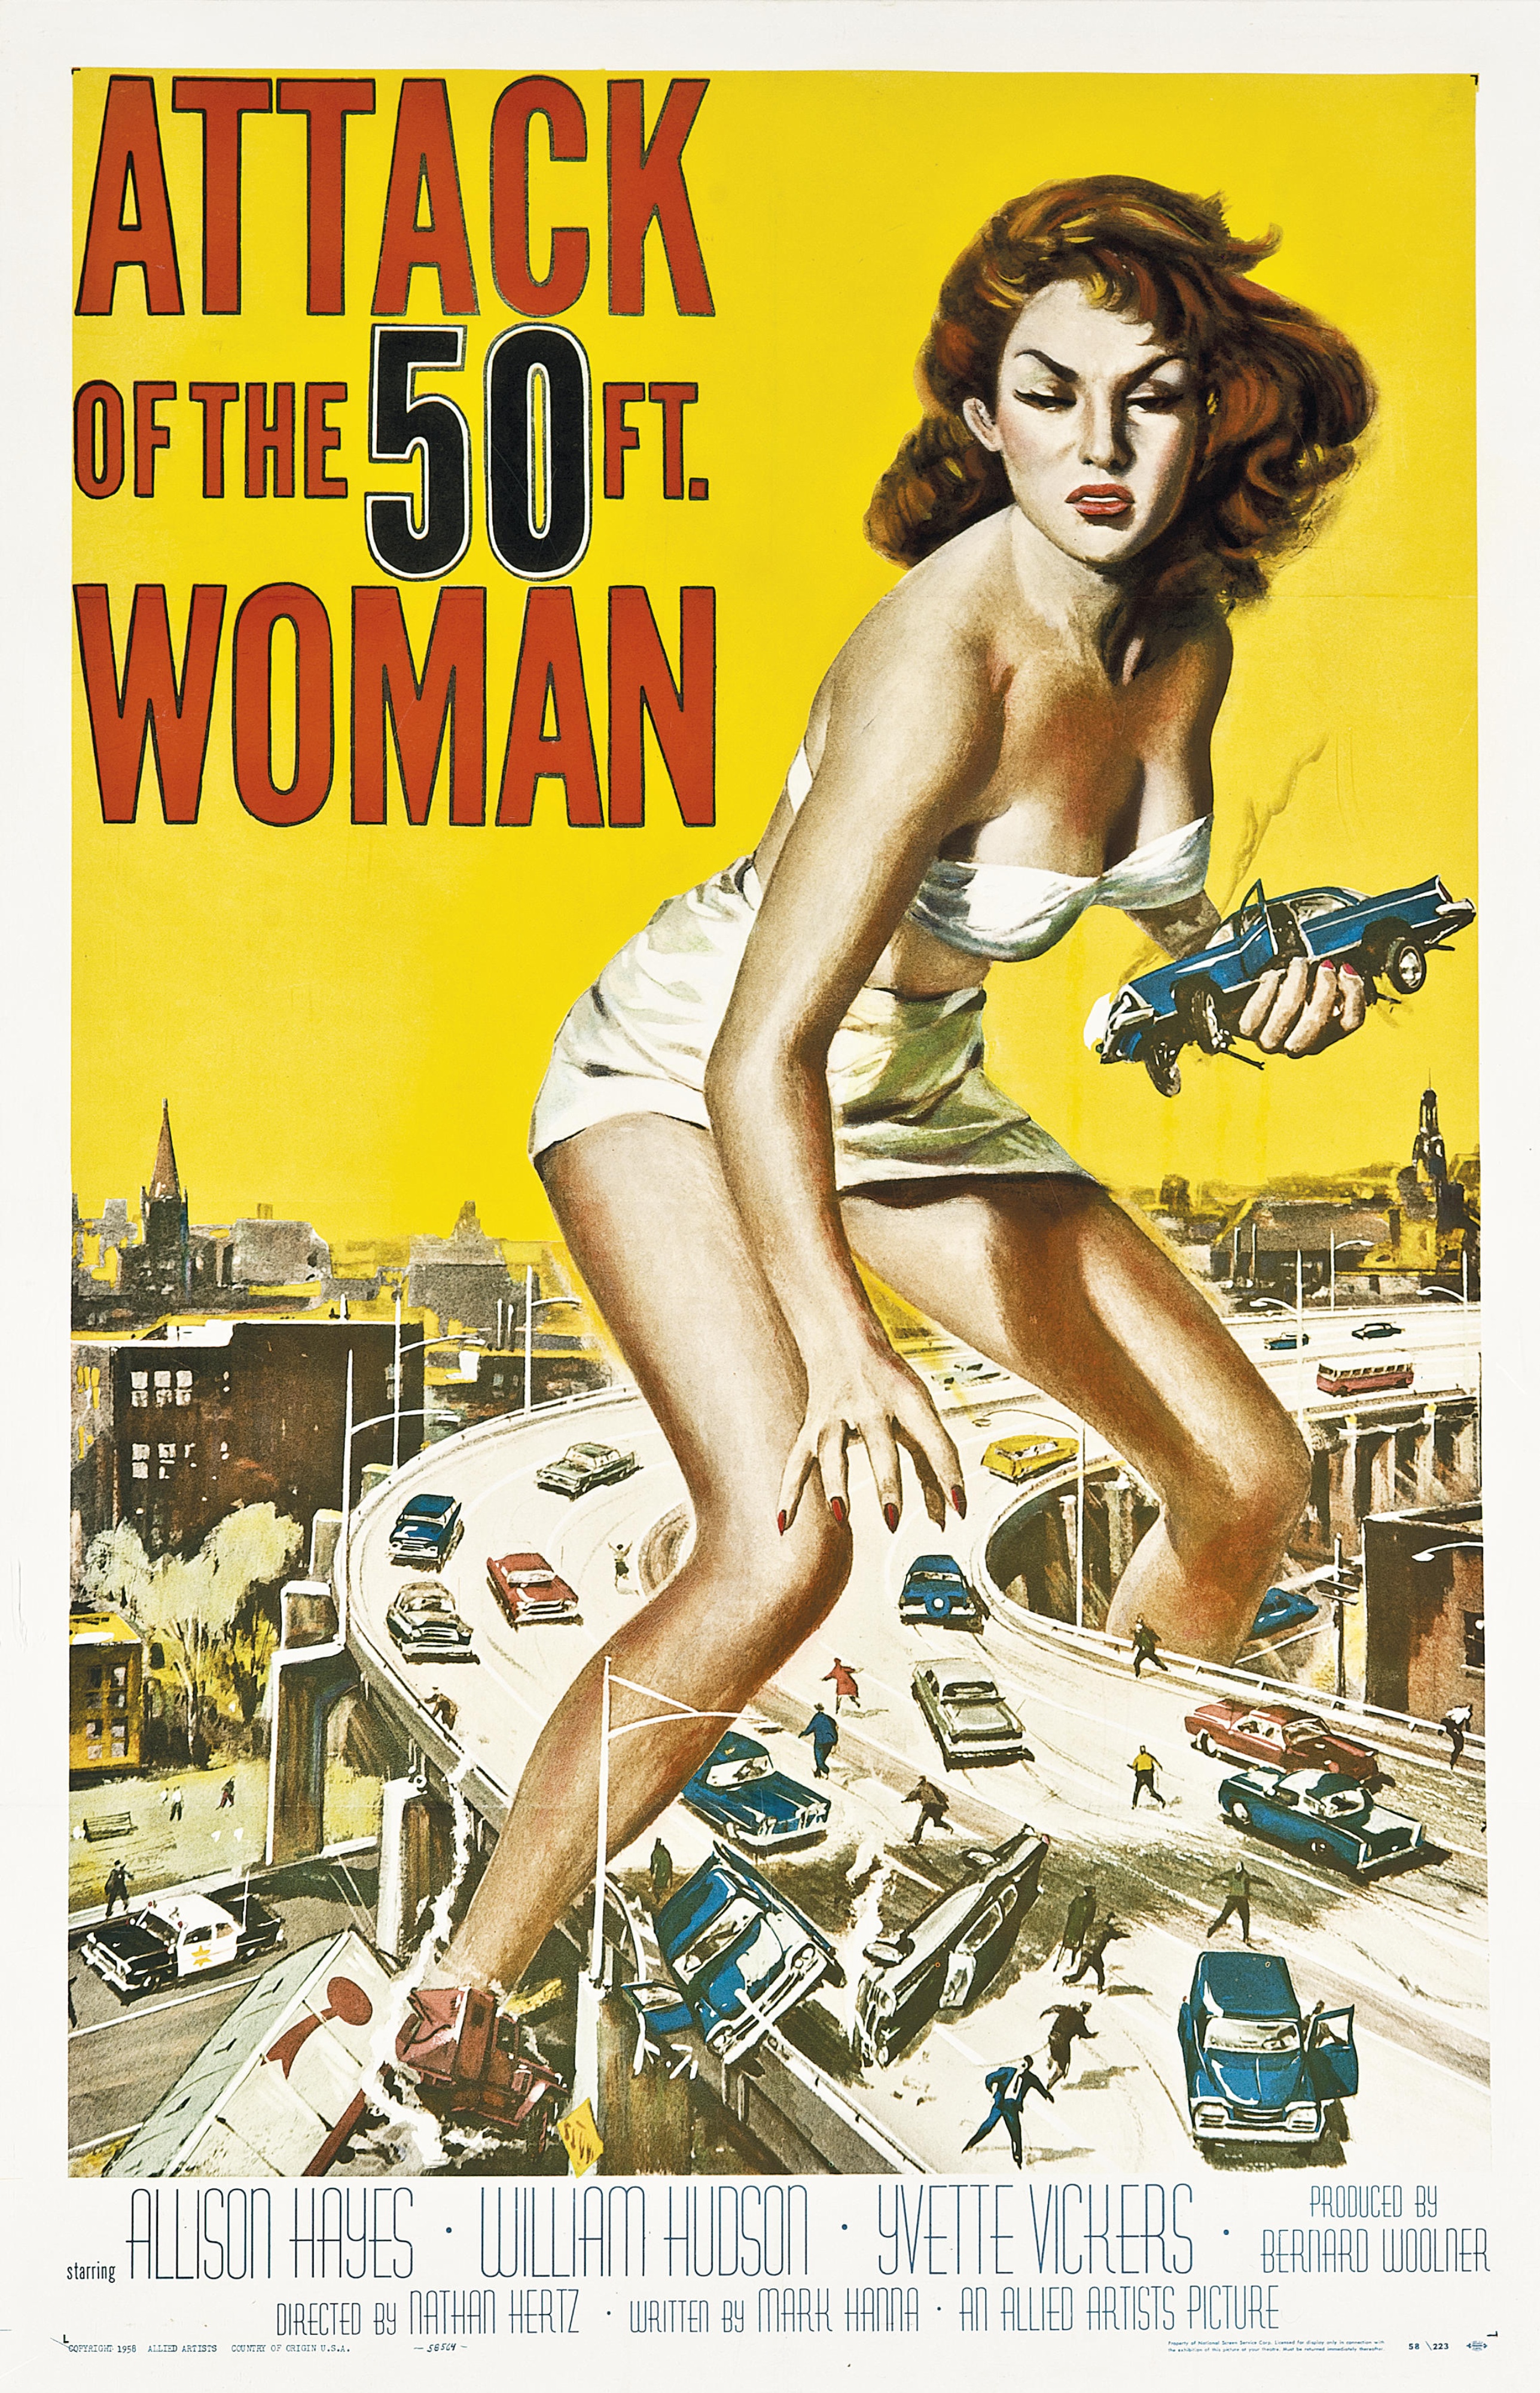 Sinema Sanattır: Muhteşem Afişlere Sahip 20 Film 20 – 1958 Attack Of The 50 Foot Woman